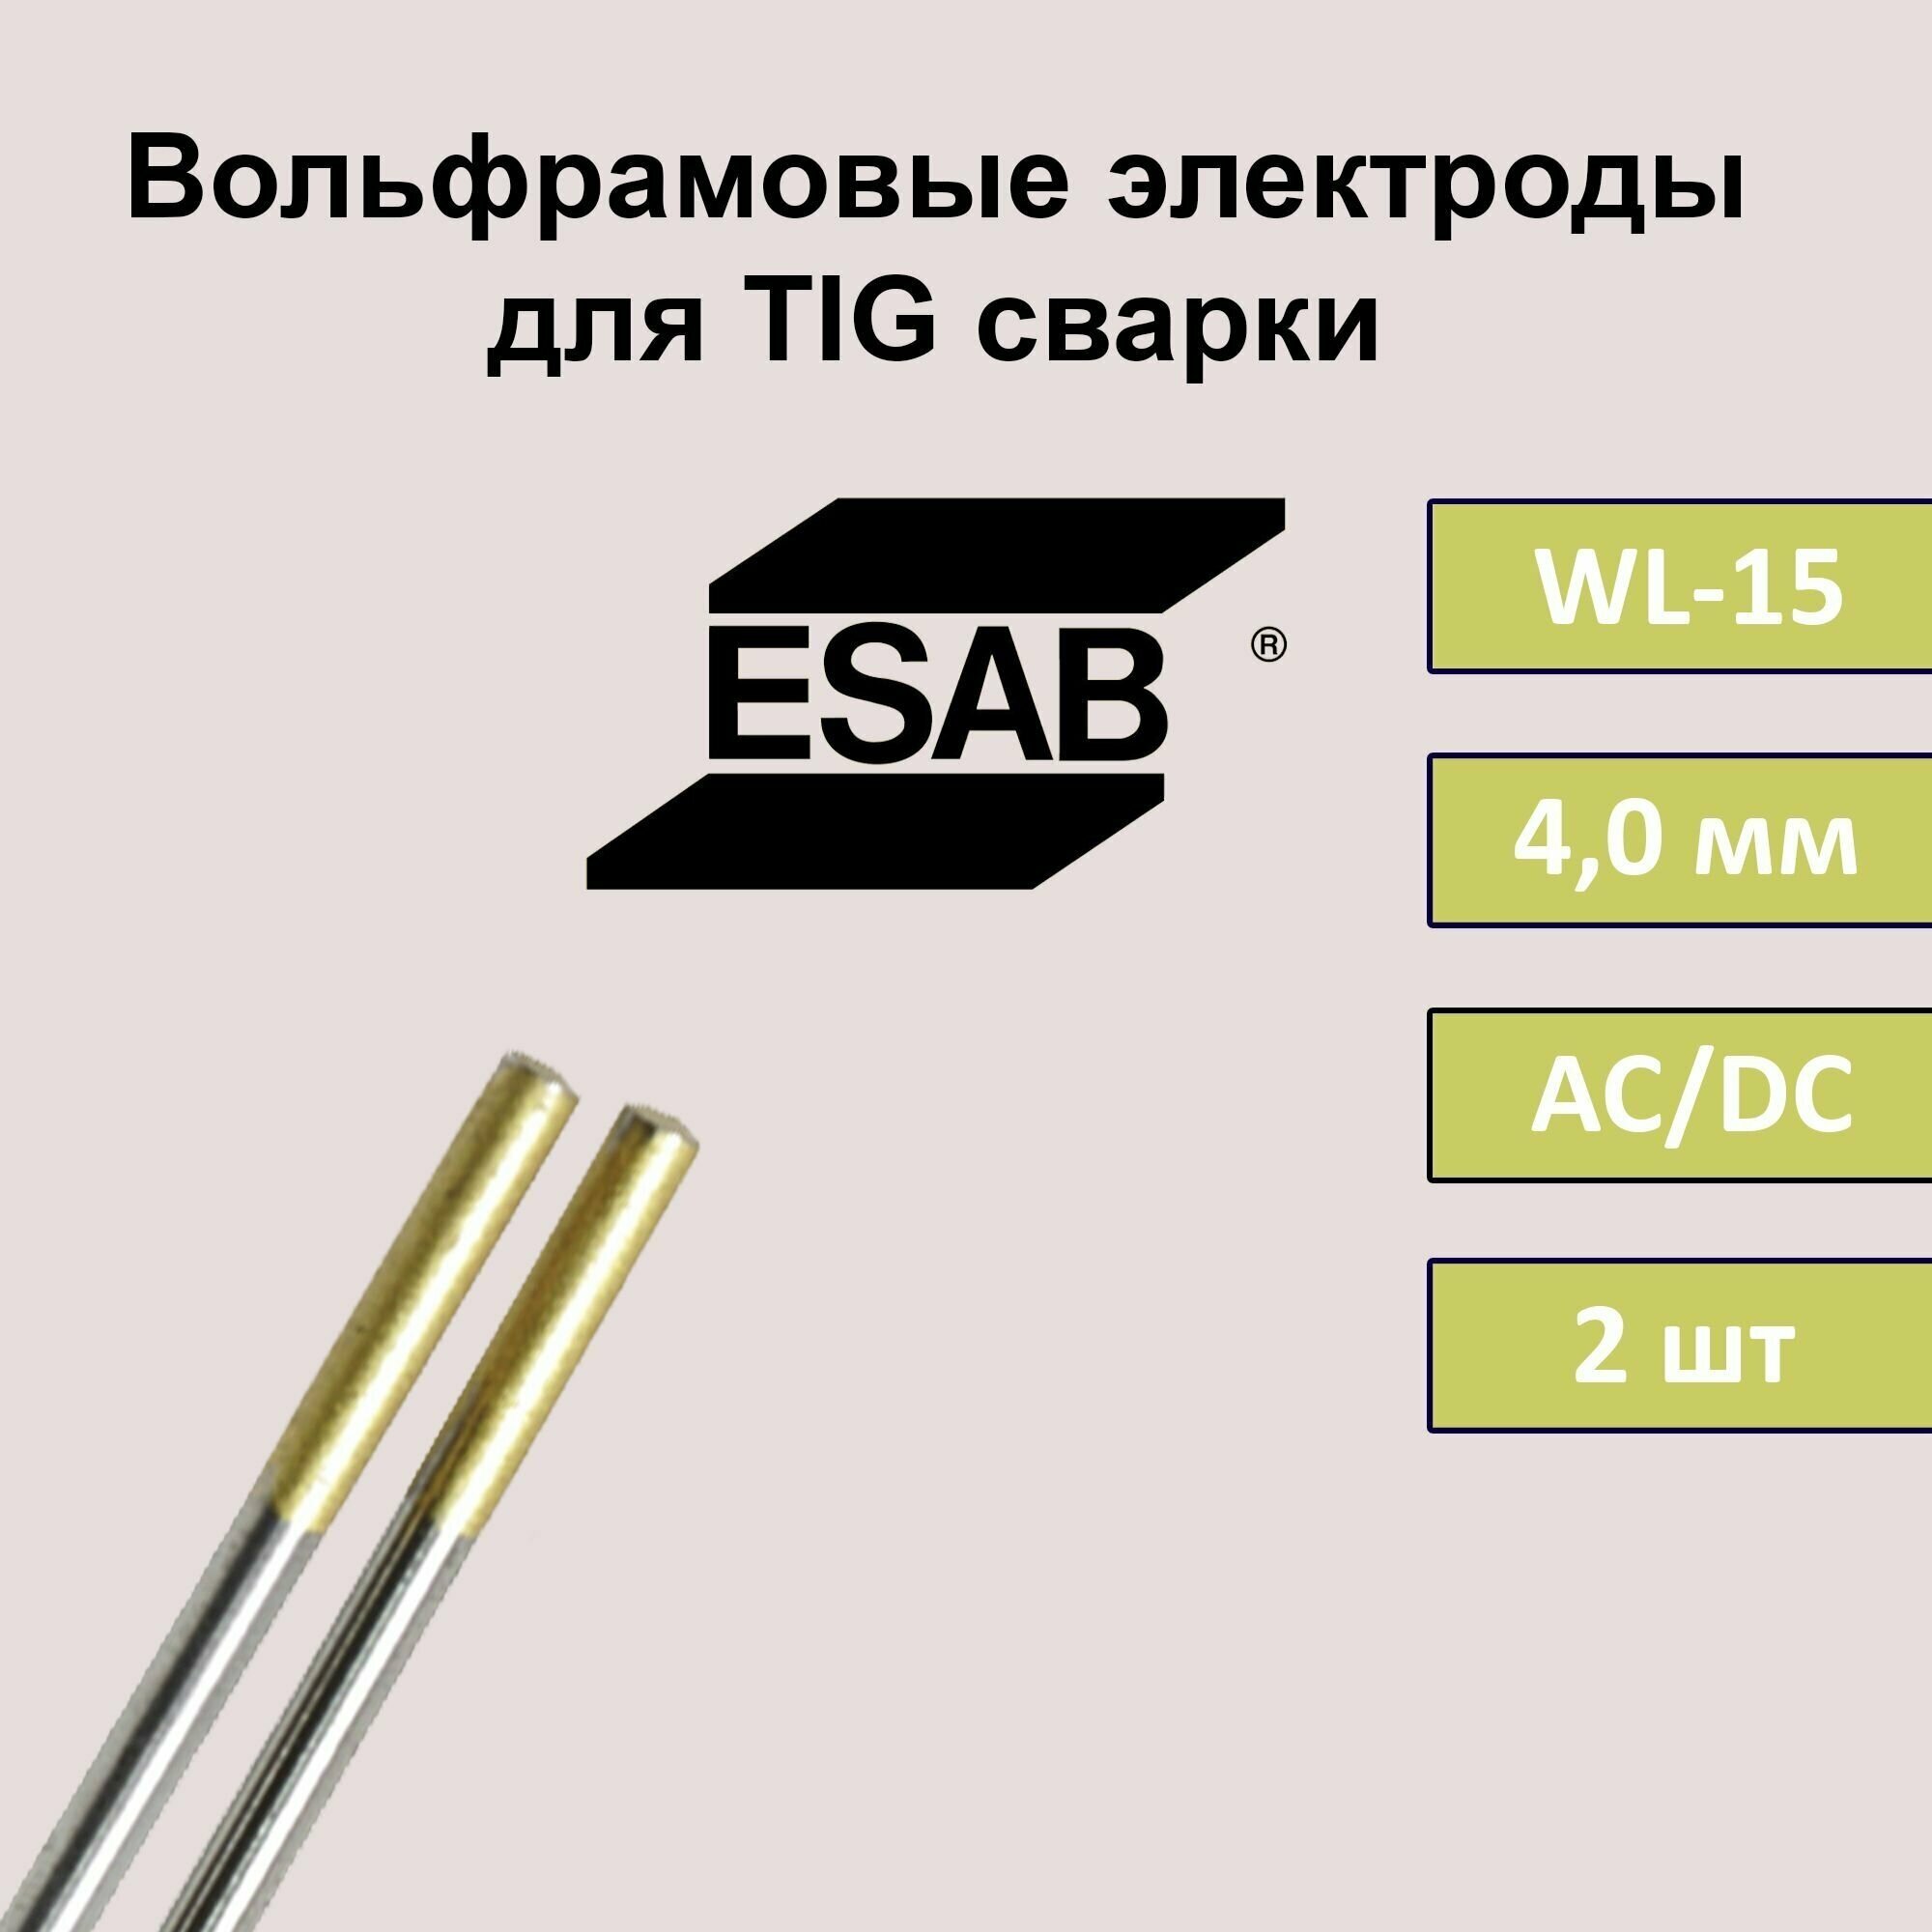 ESAB WL-15